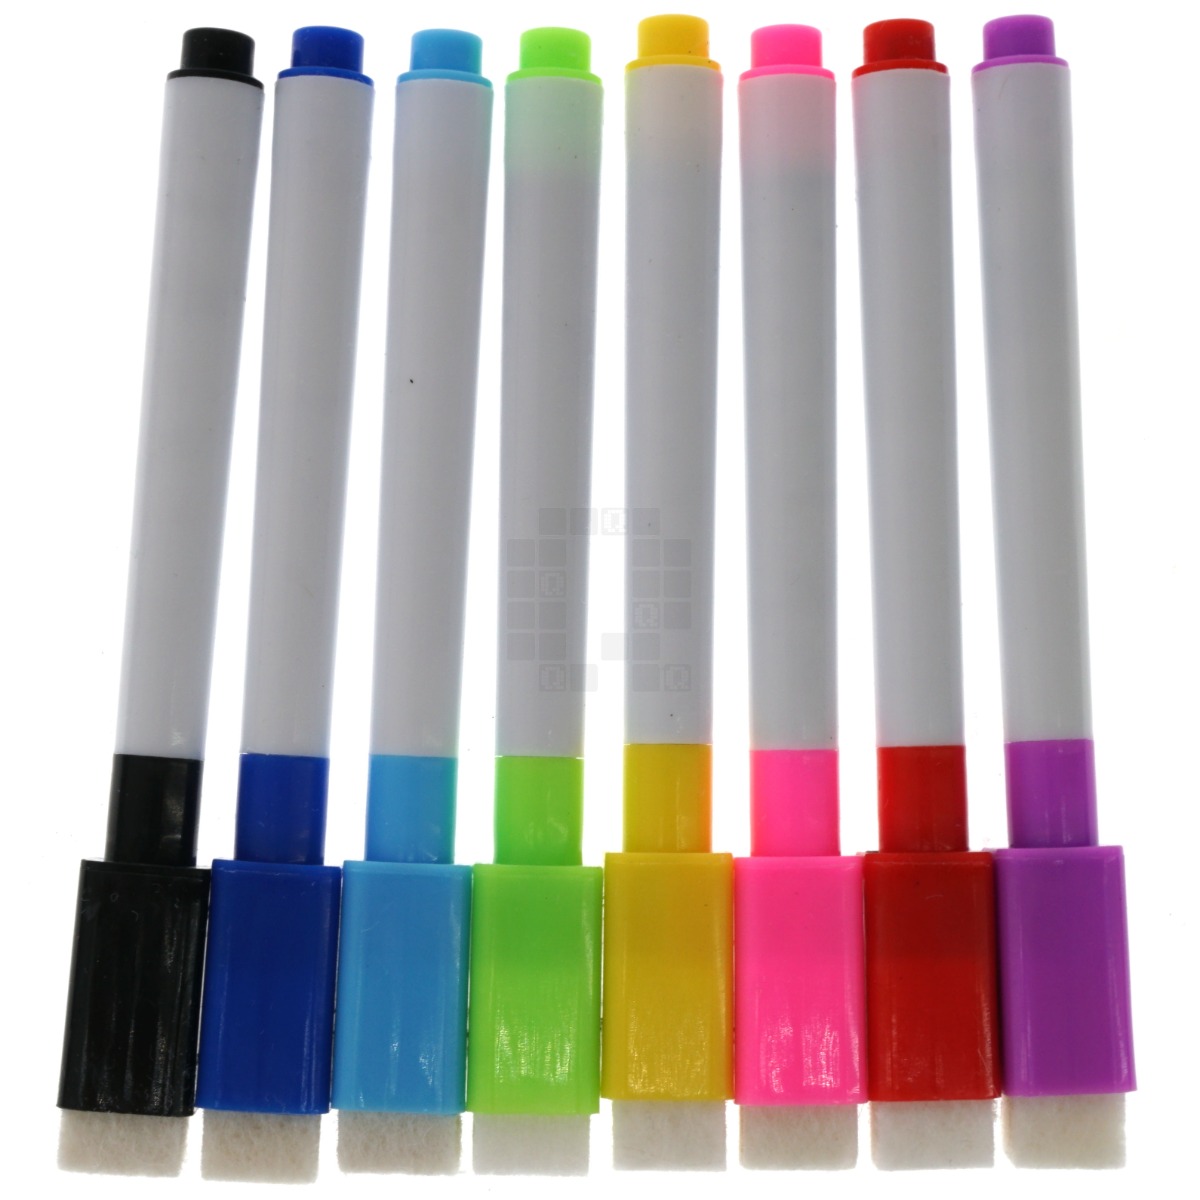 8 Pack Colored Magnetic Dry Erase Marker Set for Children's